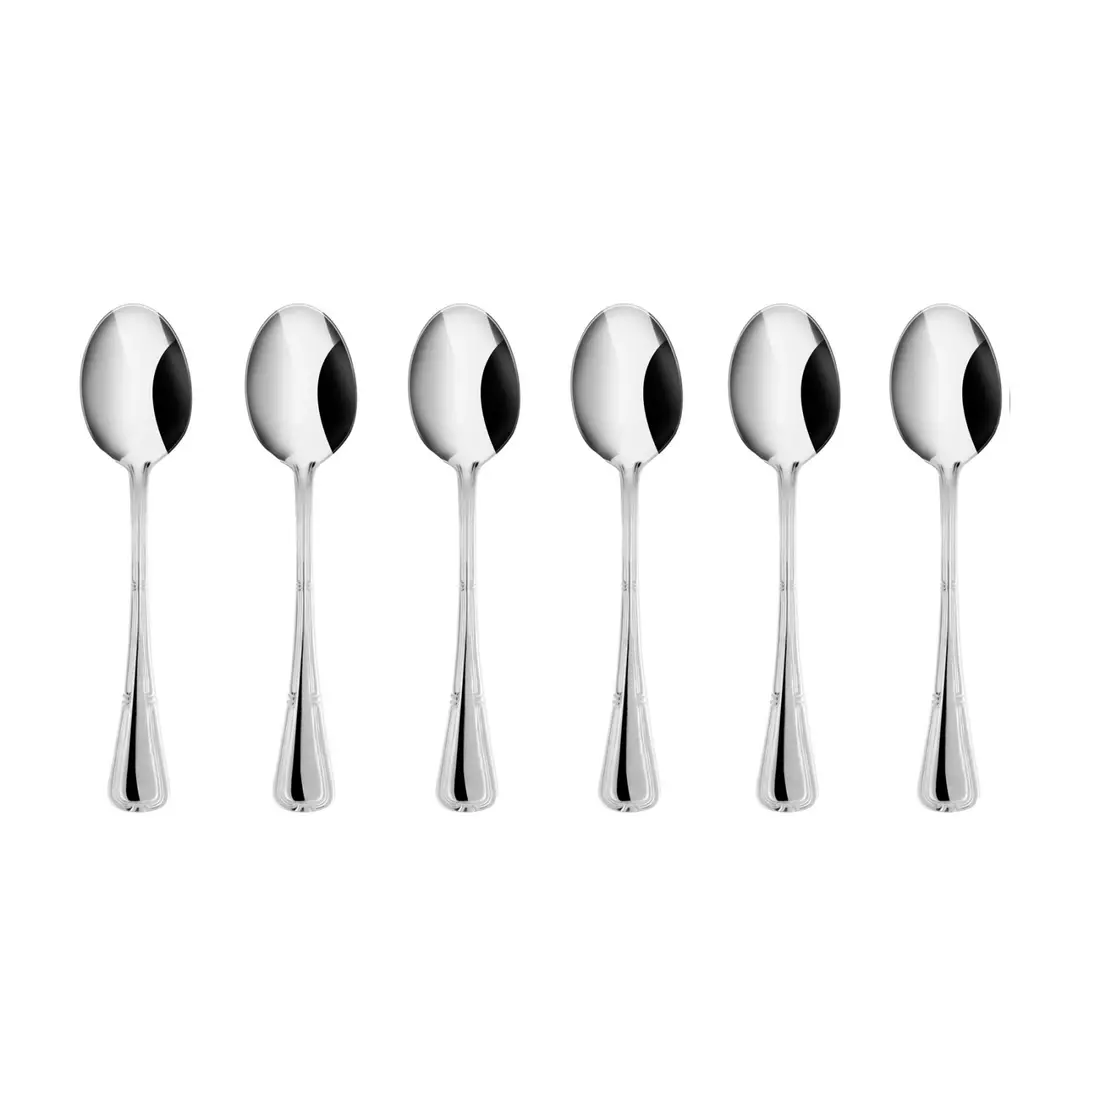 KULIG NATALIA set of 6 tea spoons, silver